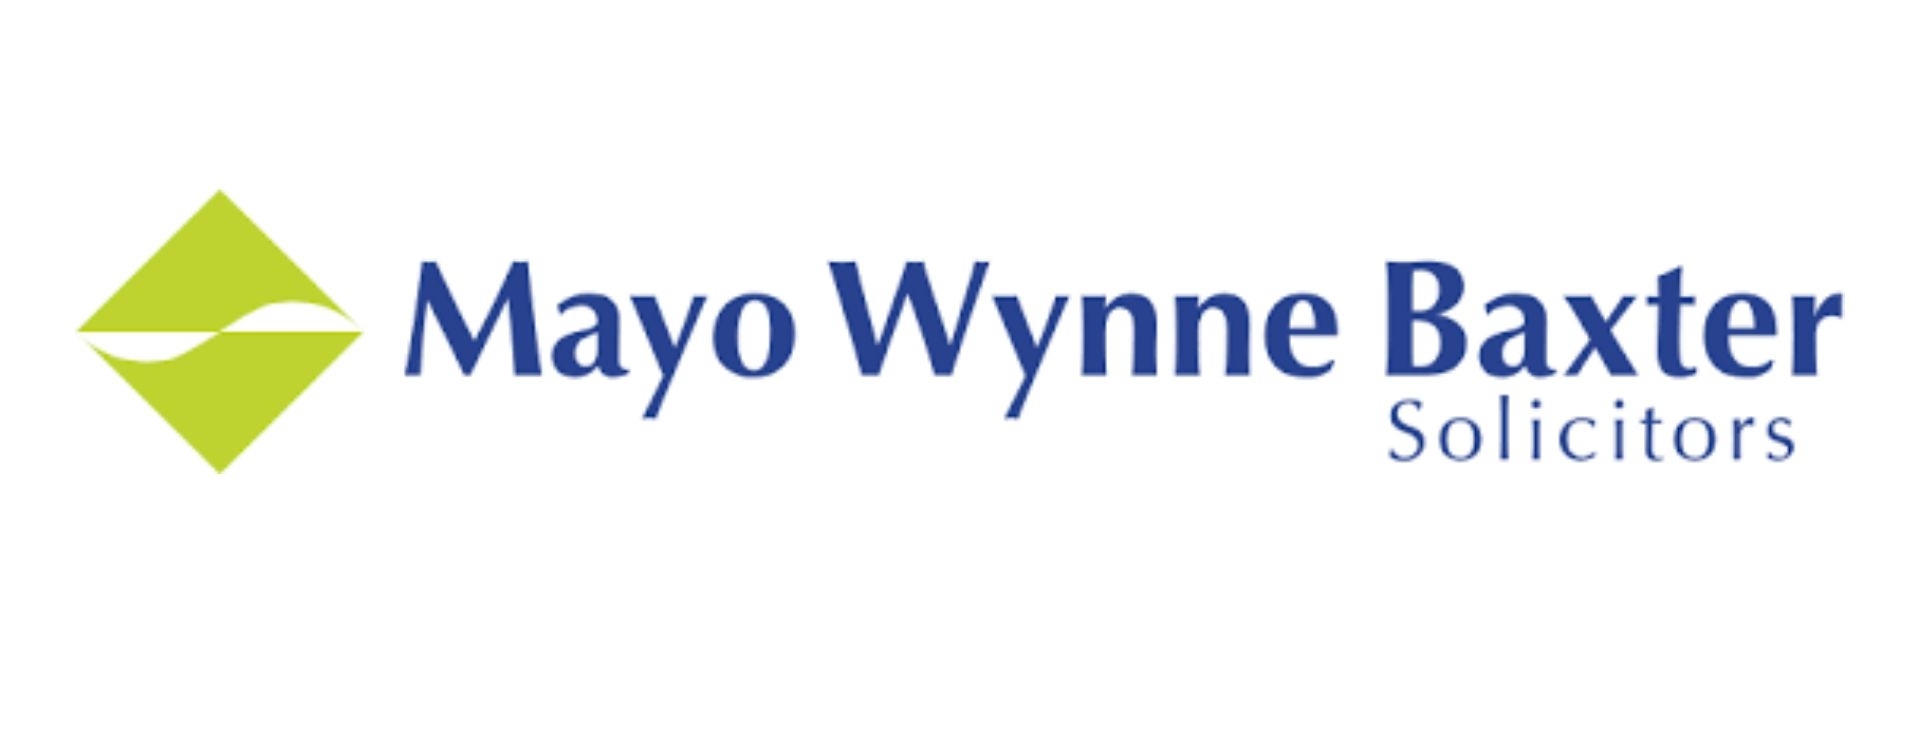 Mayo Wynne Baxter announces promotions